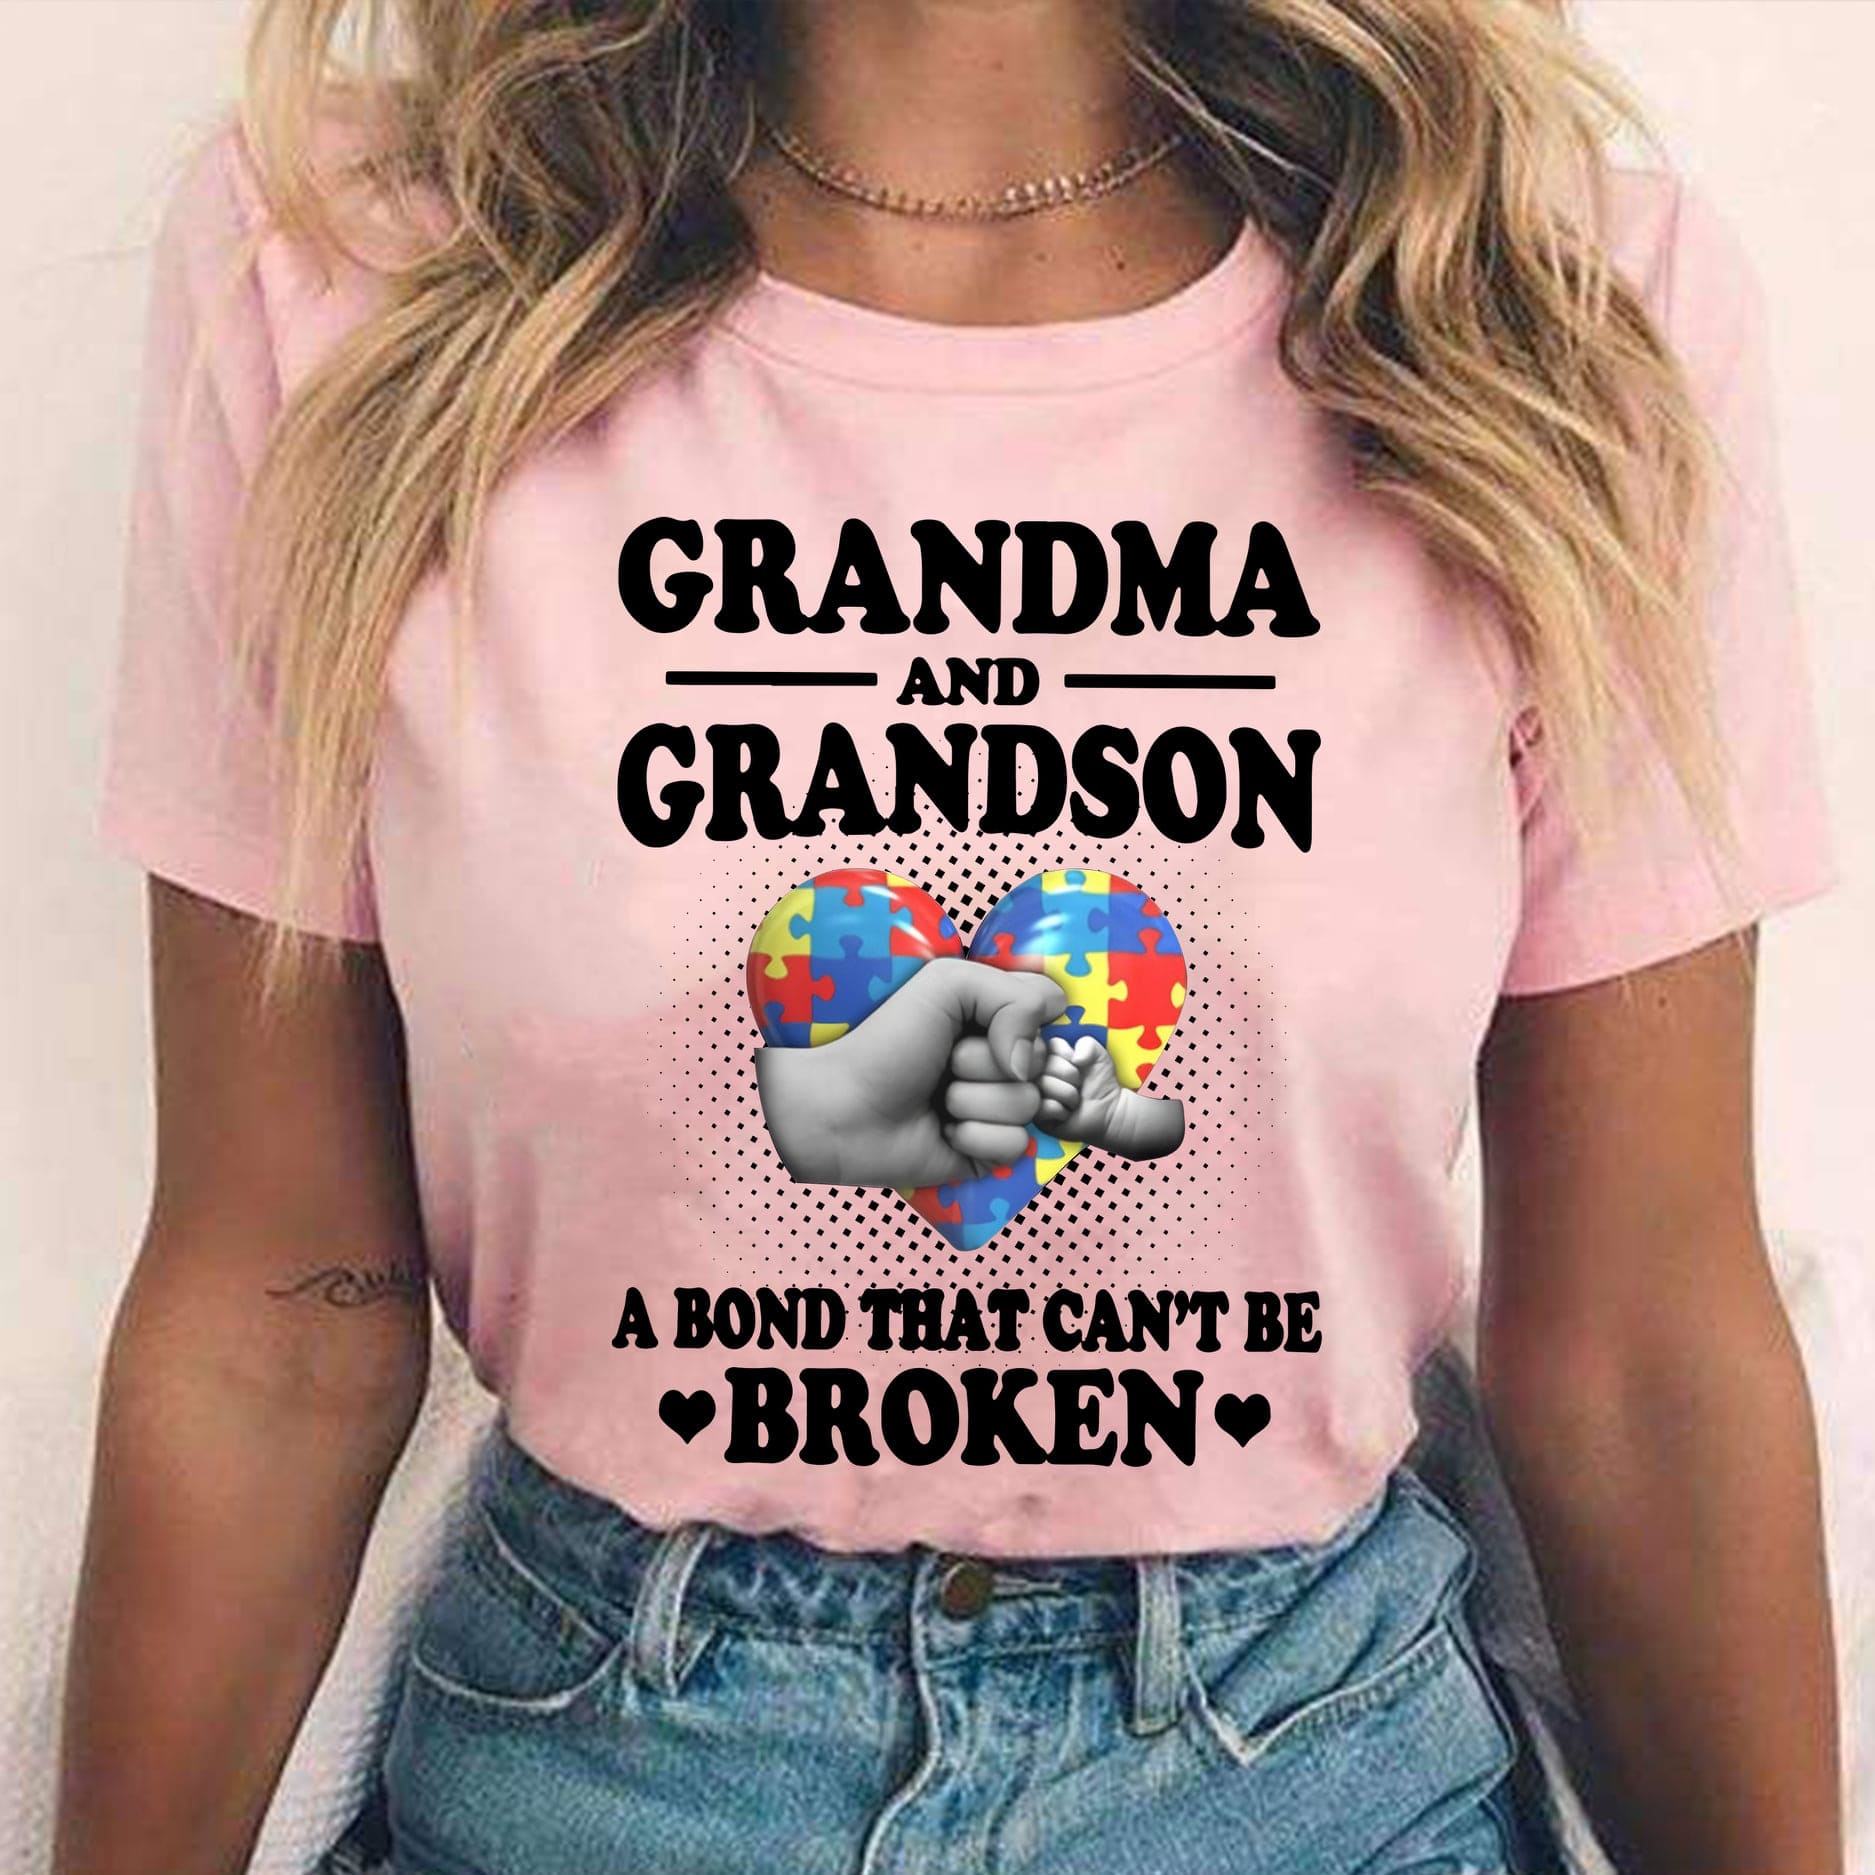 Grandma and grandson, bond that can't be broken, Autism awareness, autism family